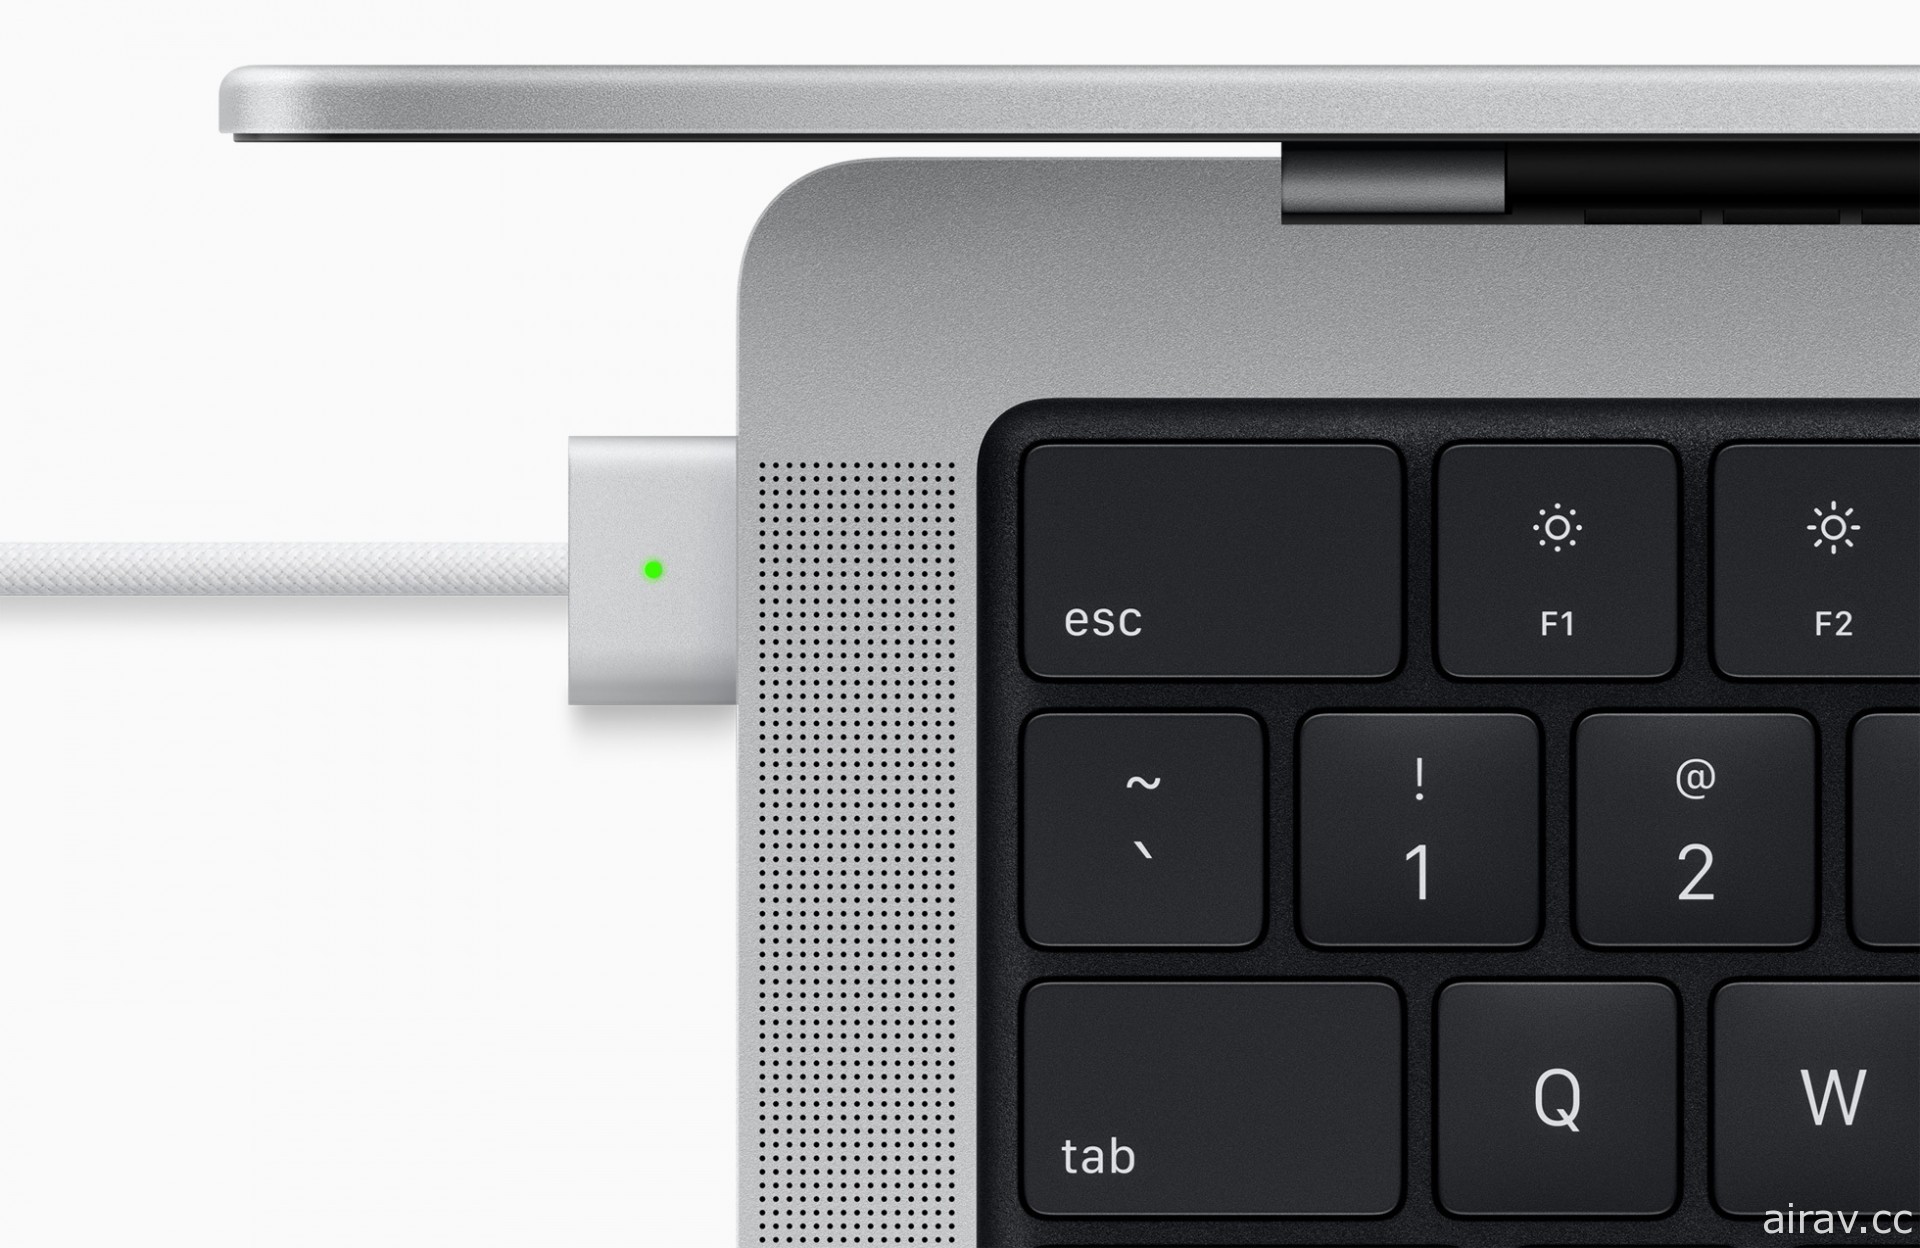 新款 MacBook Pro 搭載 M1 Pro 和 M1 Max 晶片 配備 Liquid Retina XDR 顯示器